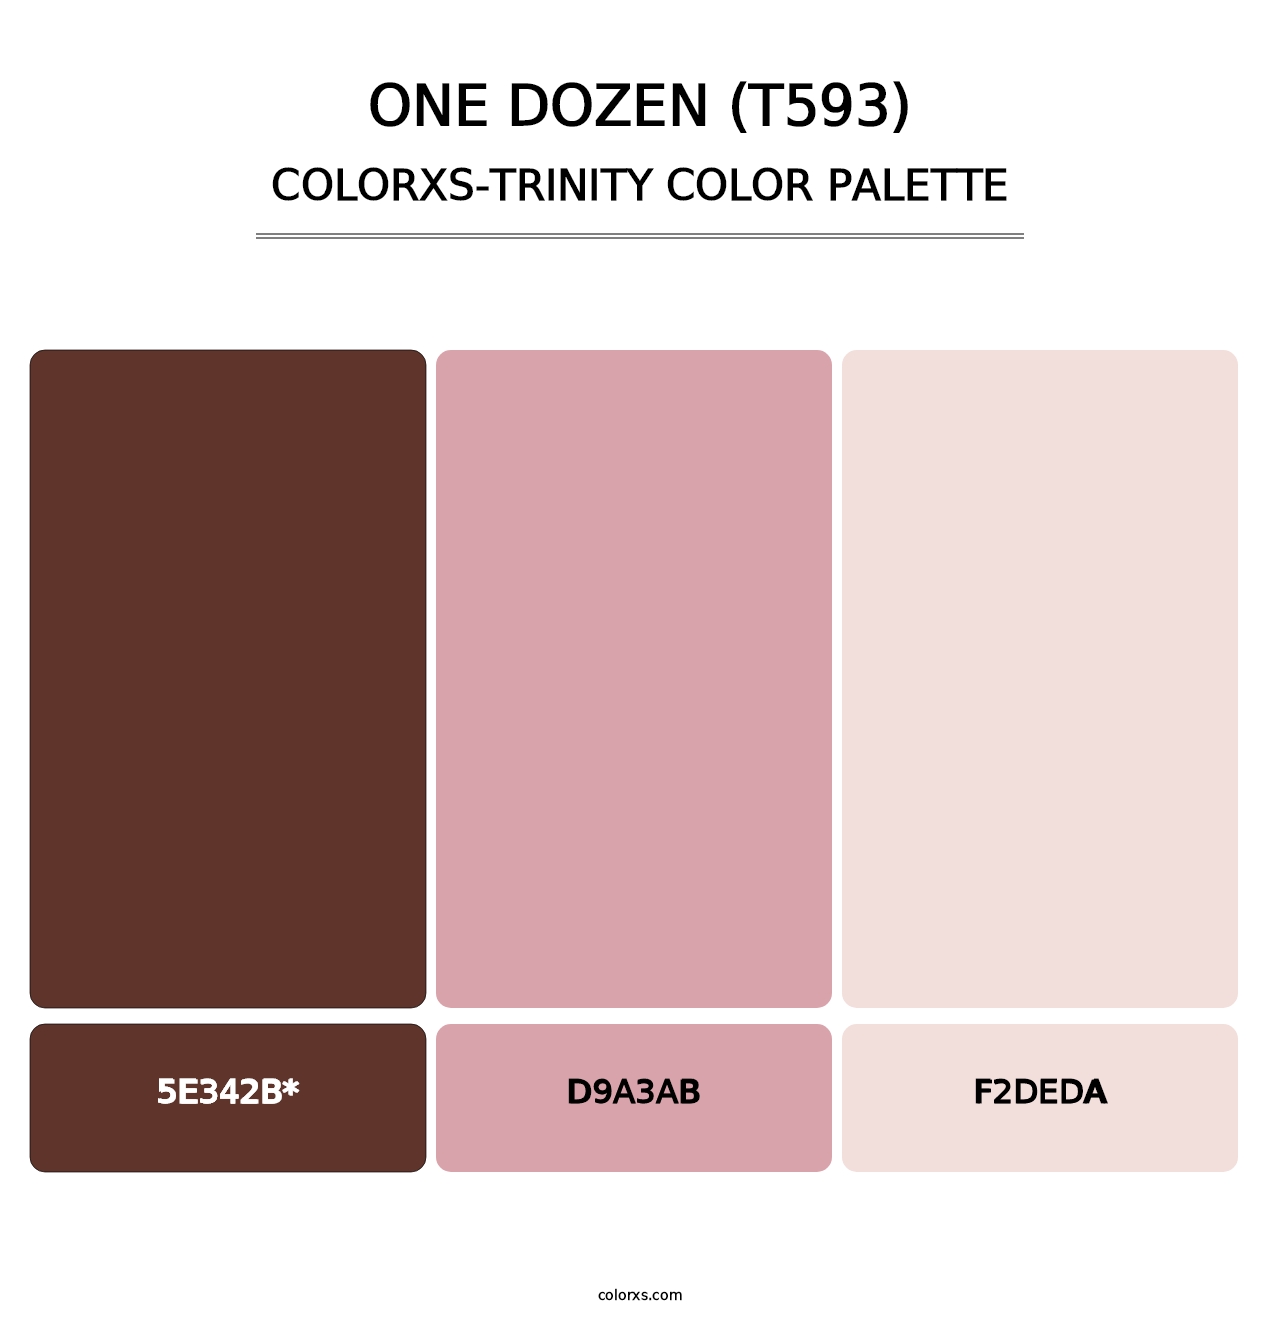 One Dozen (T593) - Colorxs Trinity Palette